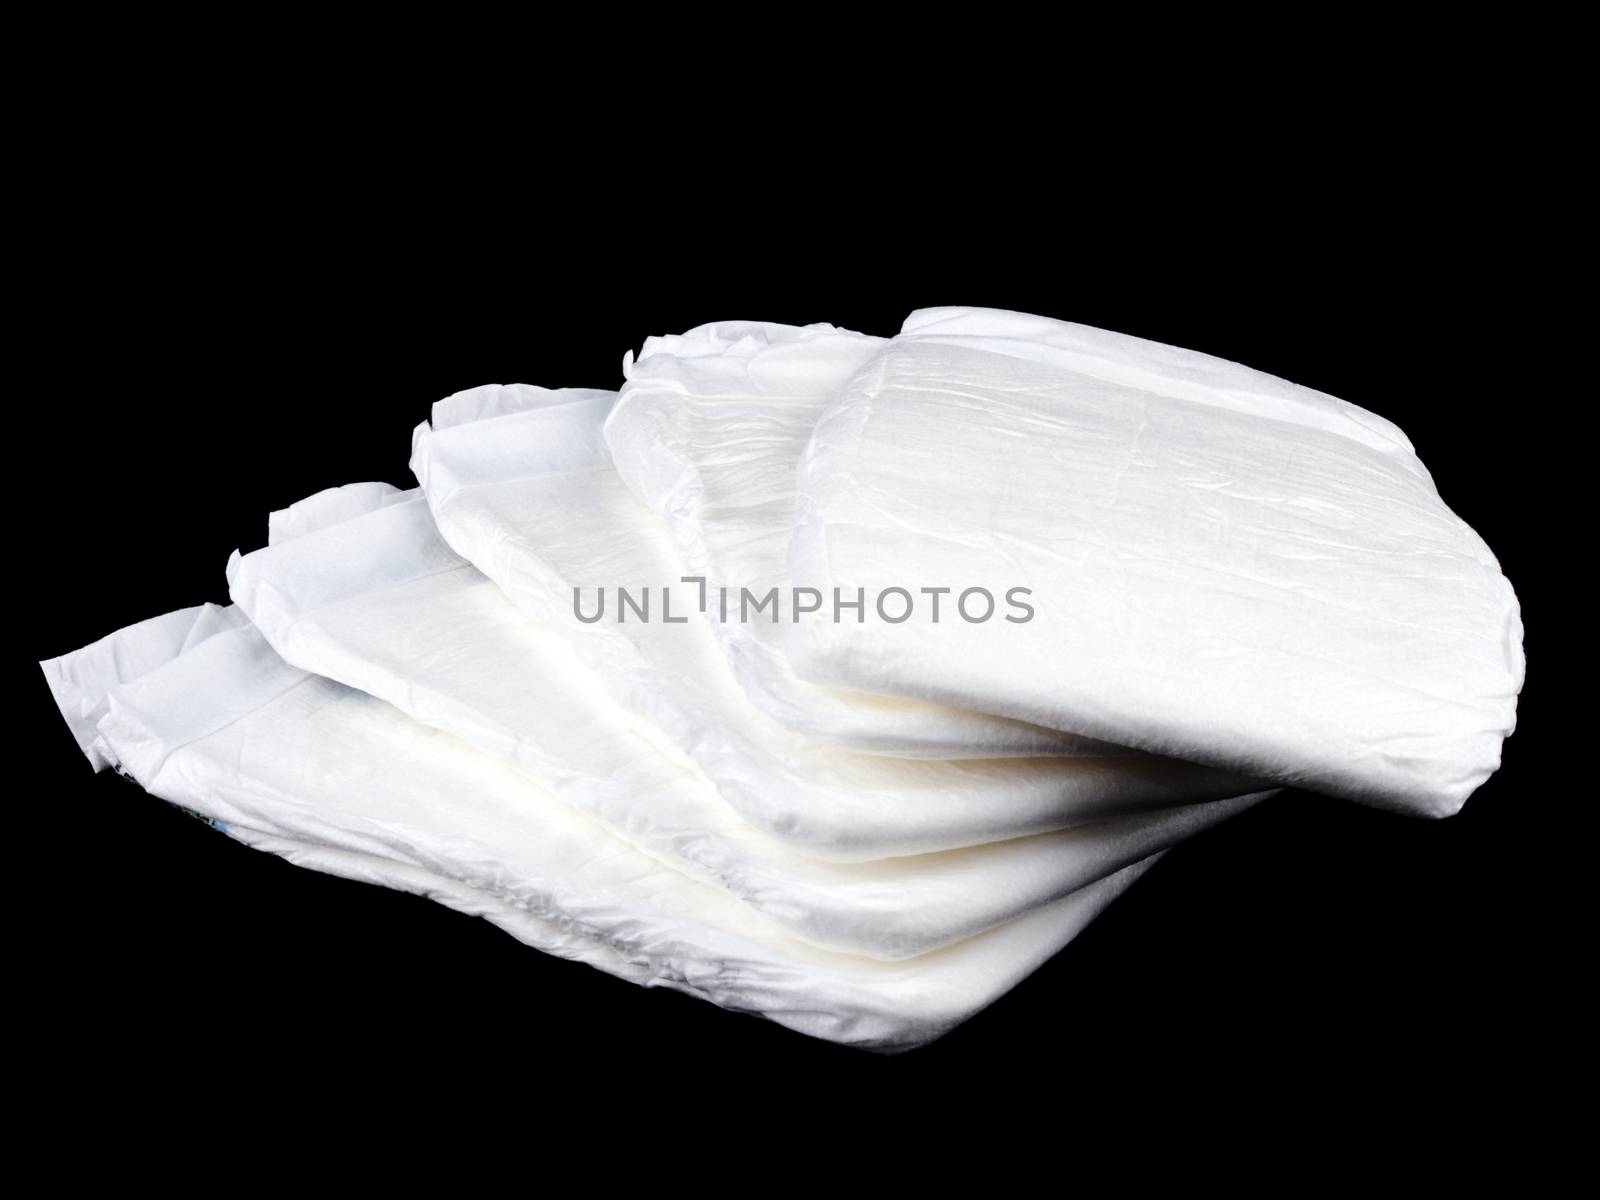 Stock of white diapers on black by mrsNstudio